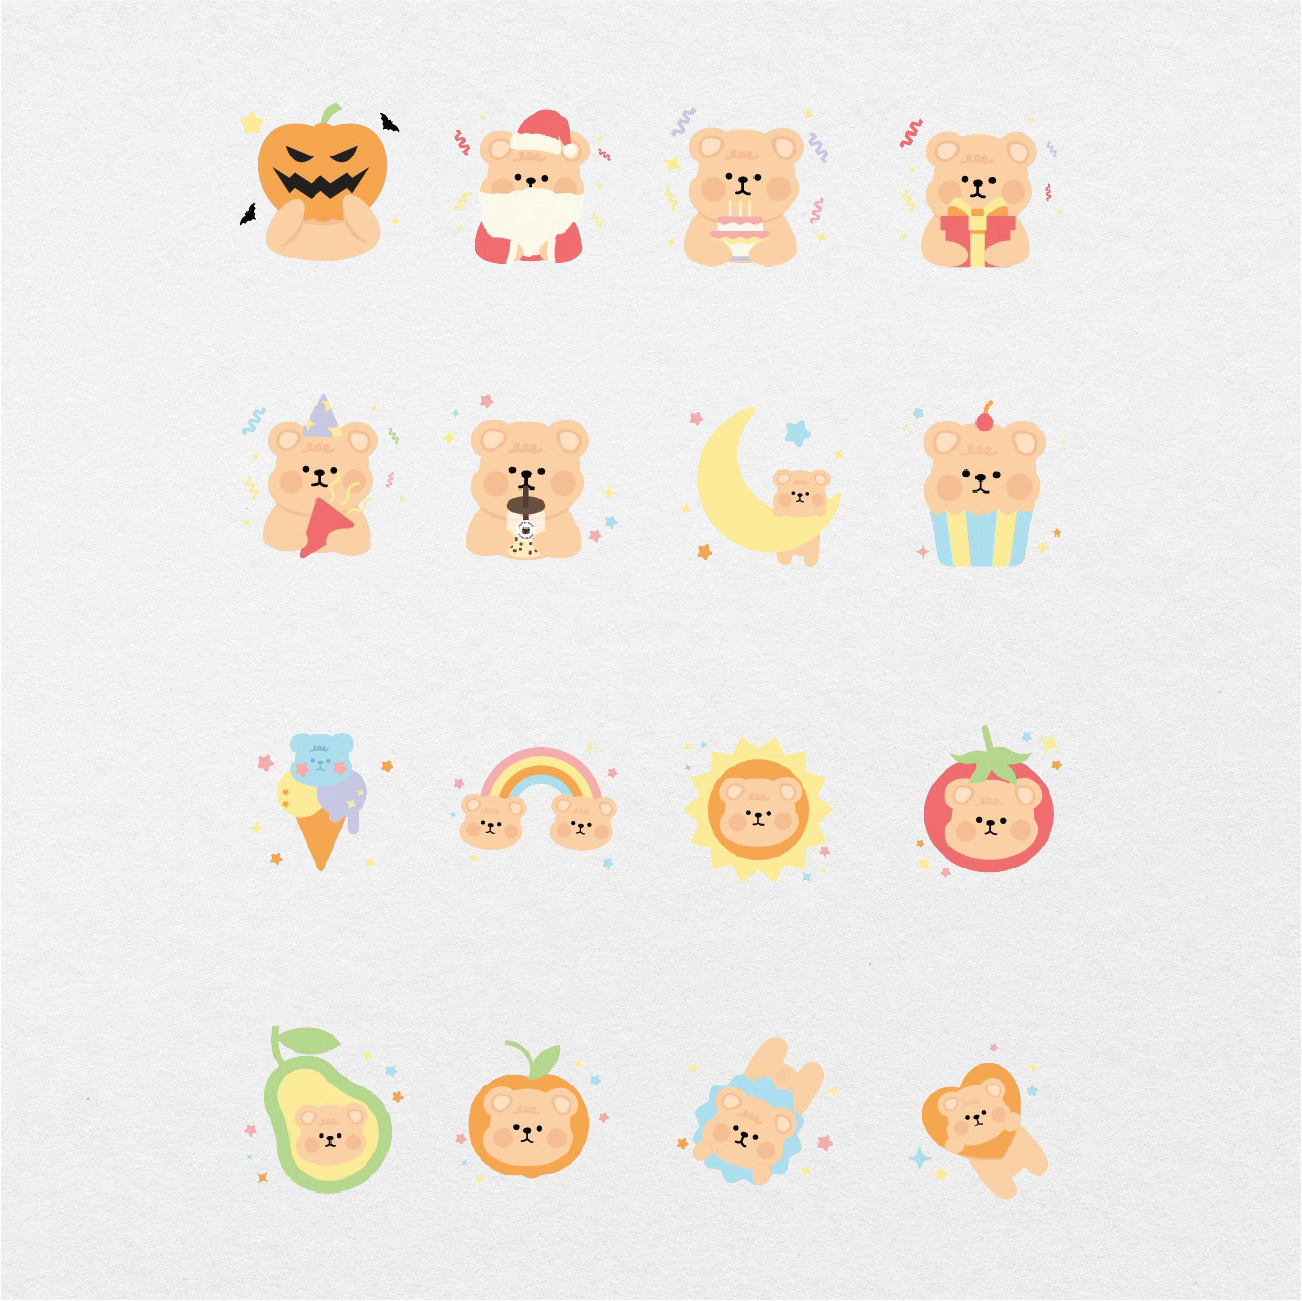 Orange Be Kind Aesthetic Sticker Pack | Art Board Print